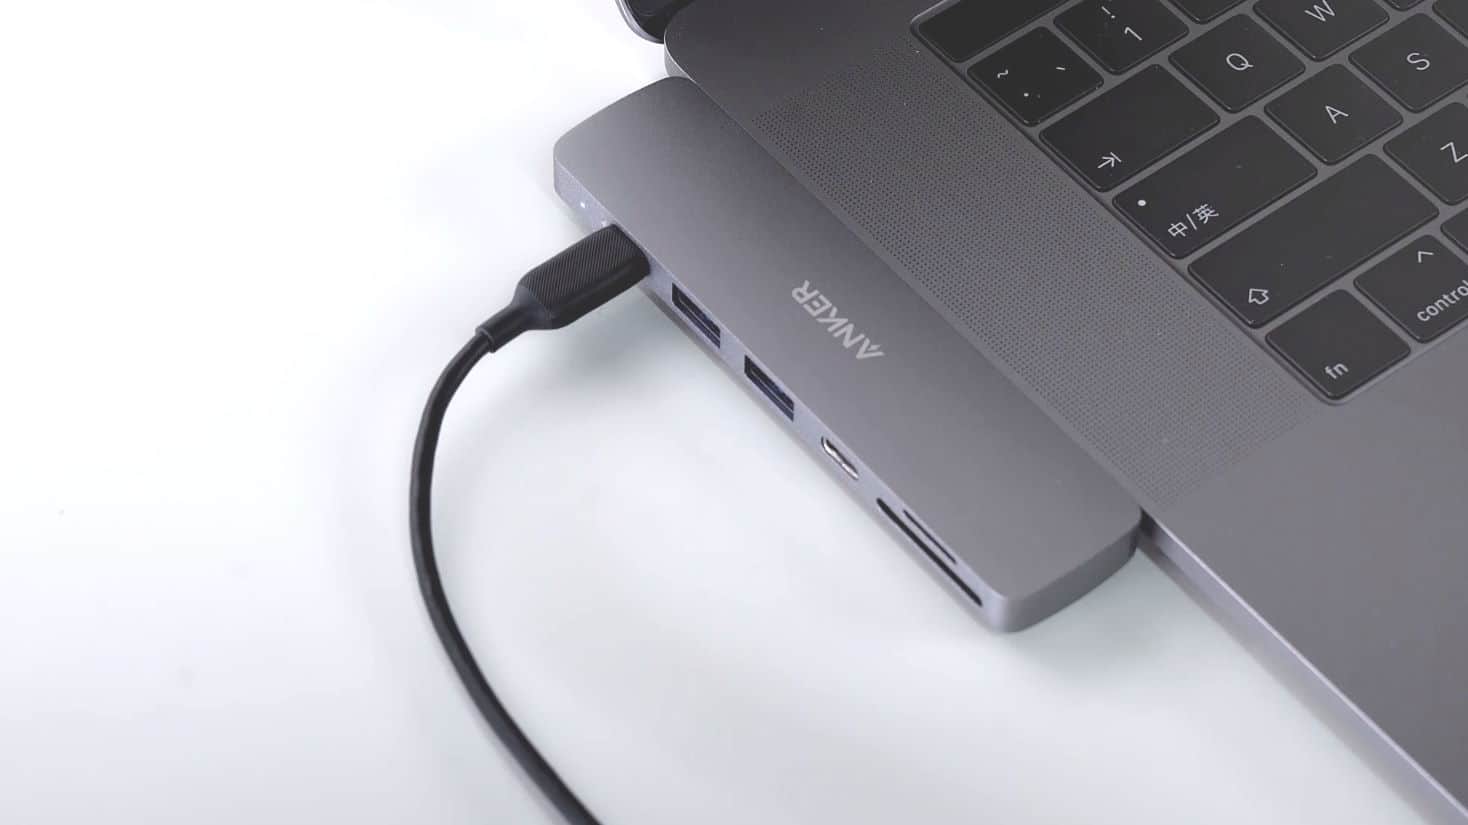 6in1 for macbook pro mac pc laptop charging&reader usb c hub 3.0 type-c adapter